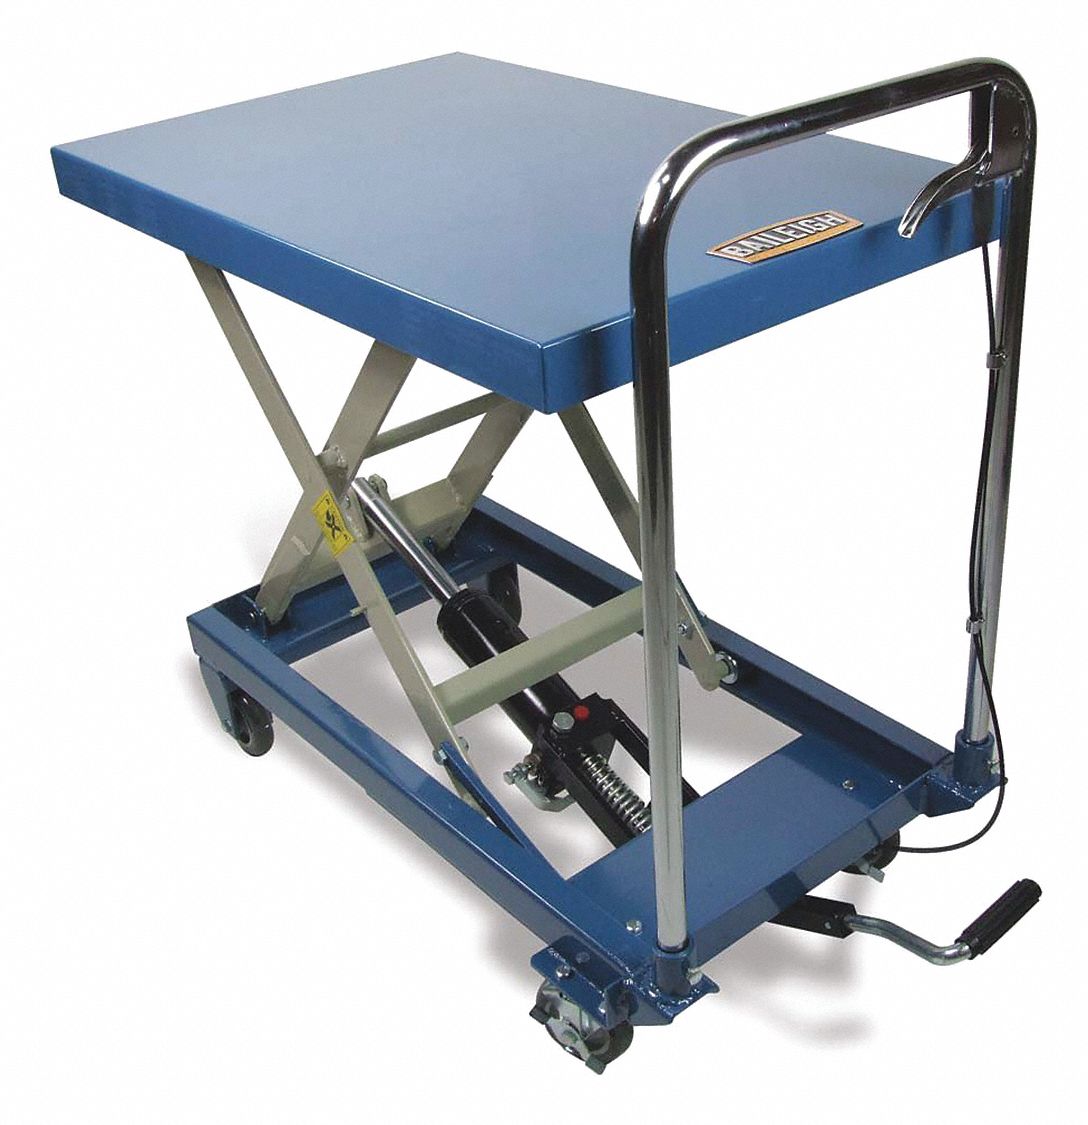 Manual Mobile Scissor-Lift Table: 660 lb Load Capacity, 32 in x 20 in Platform